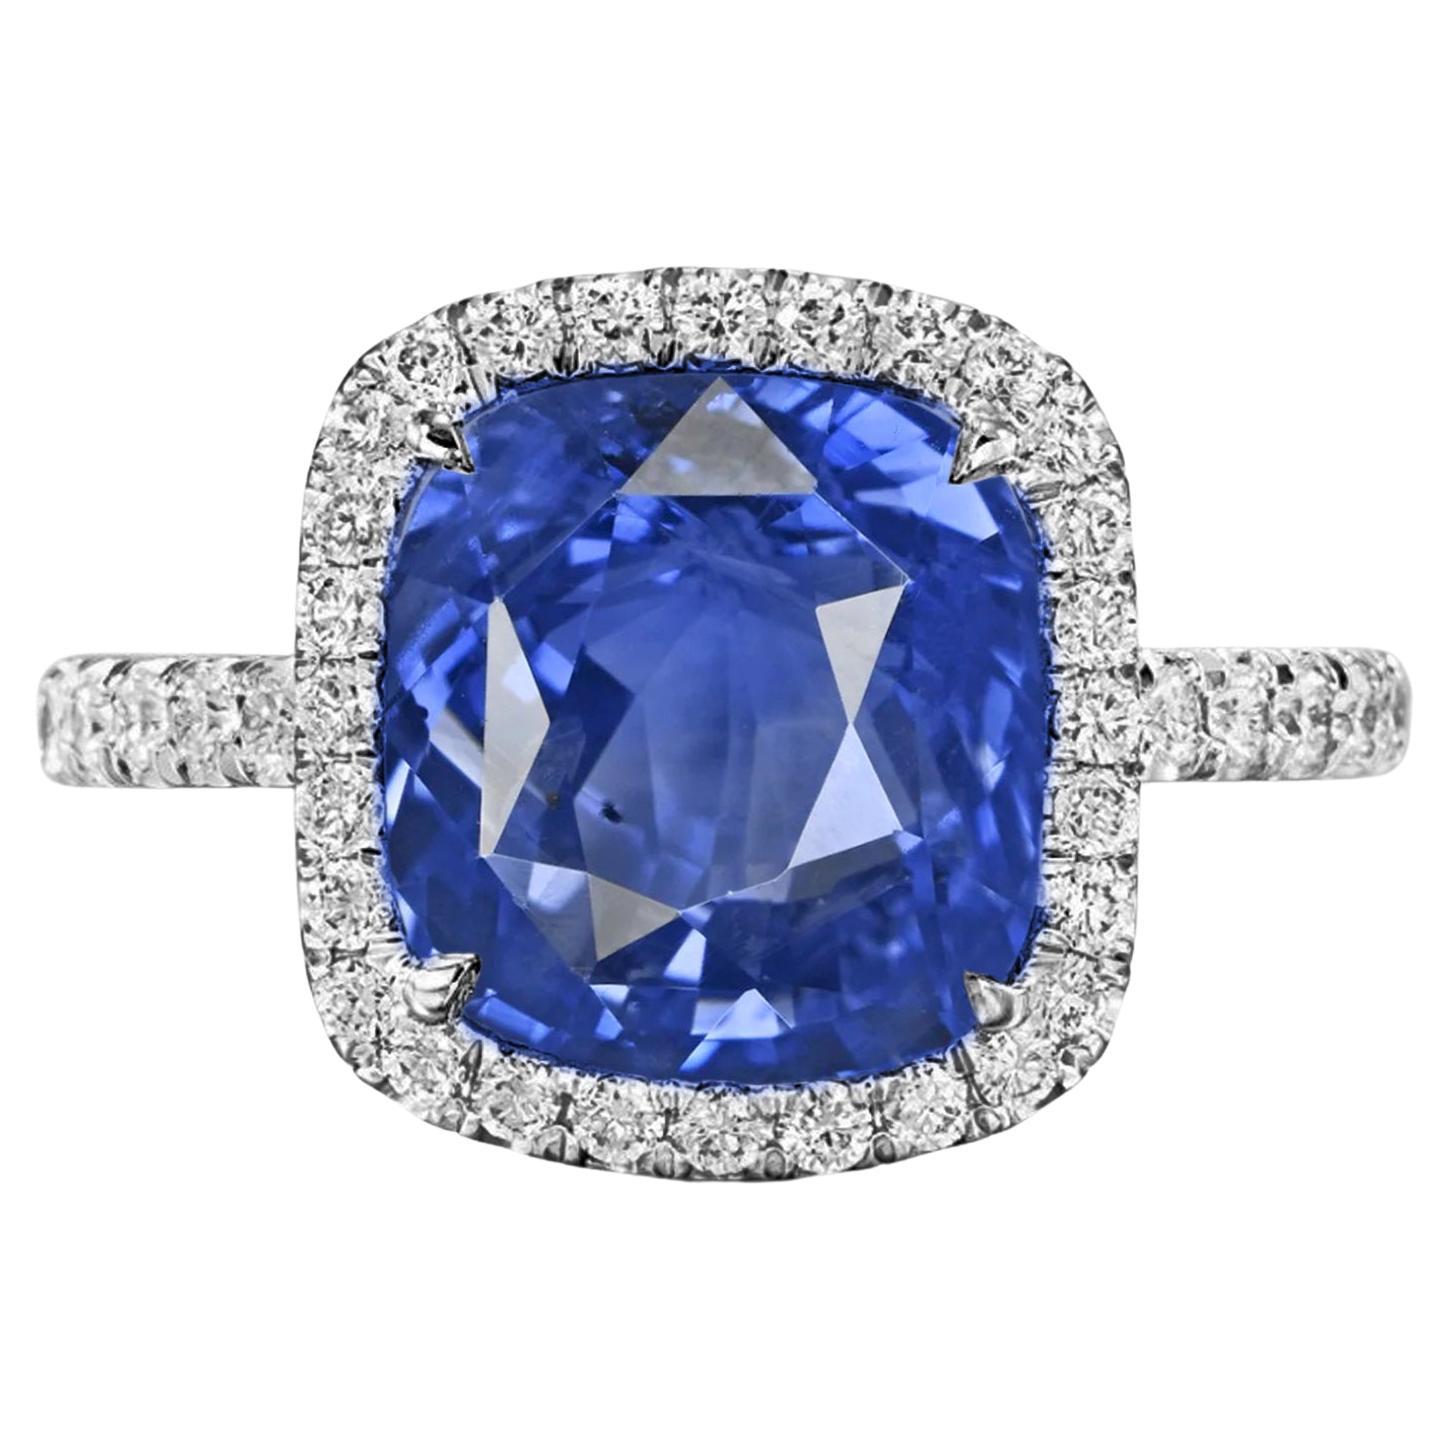 SSEF Switzerland Unheated Untreated 7 Carat Ceylon Blue Sapphire Ring For Sale